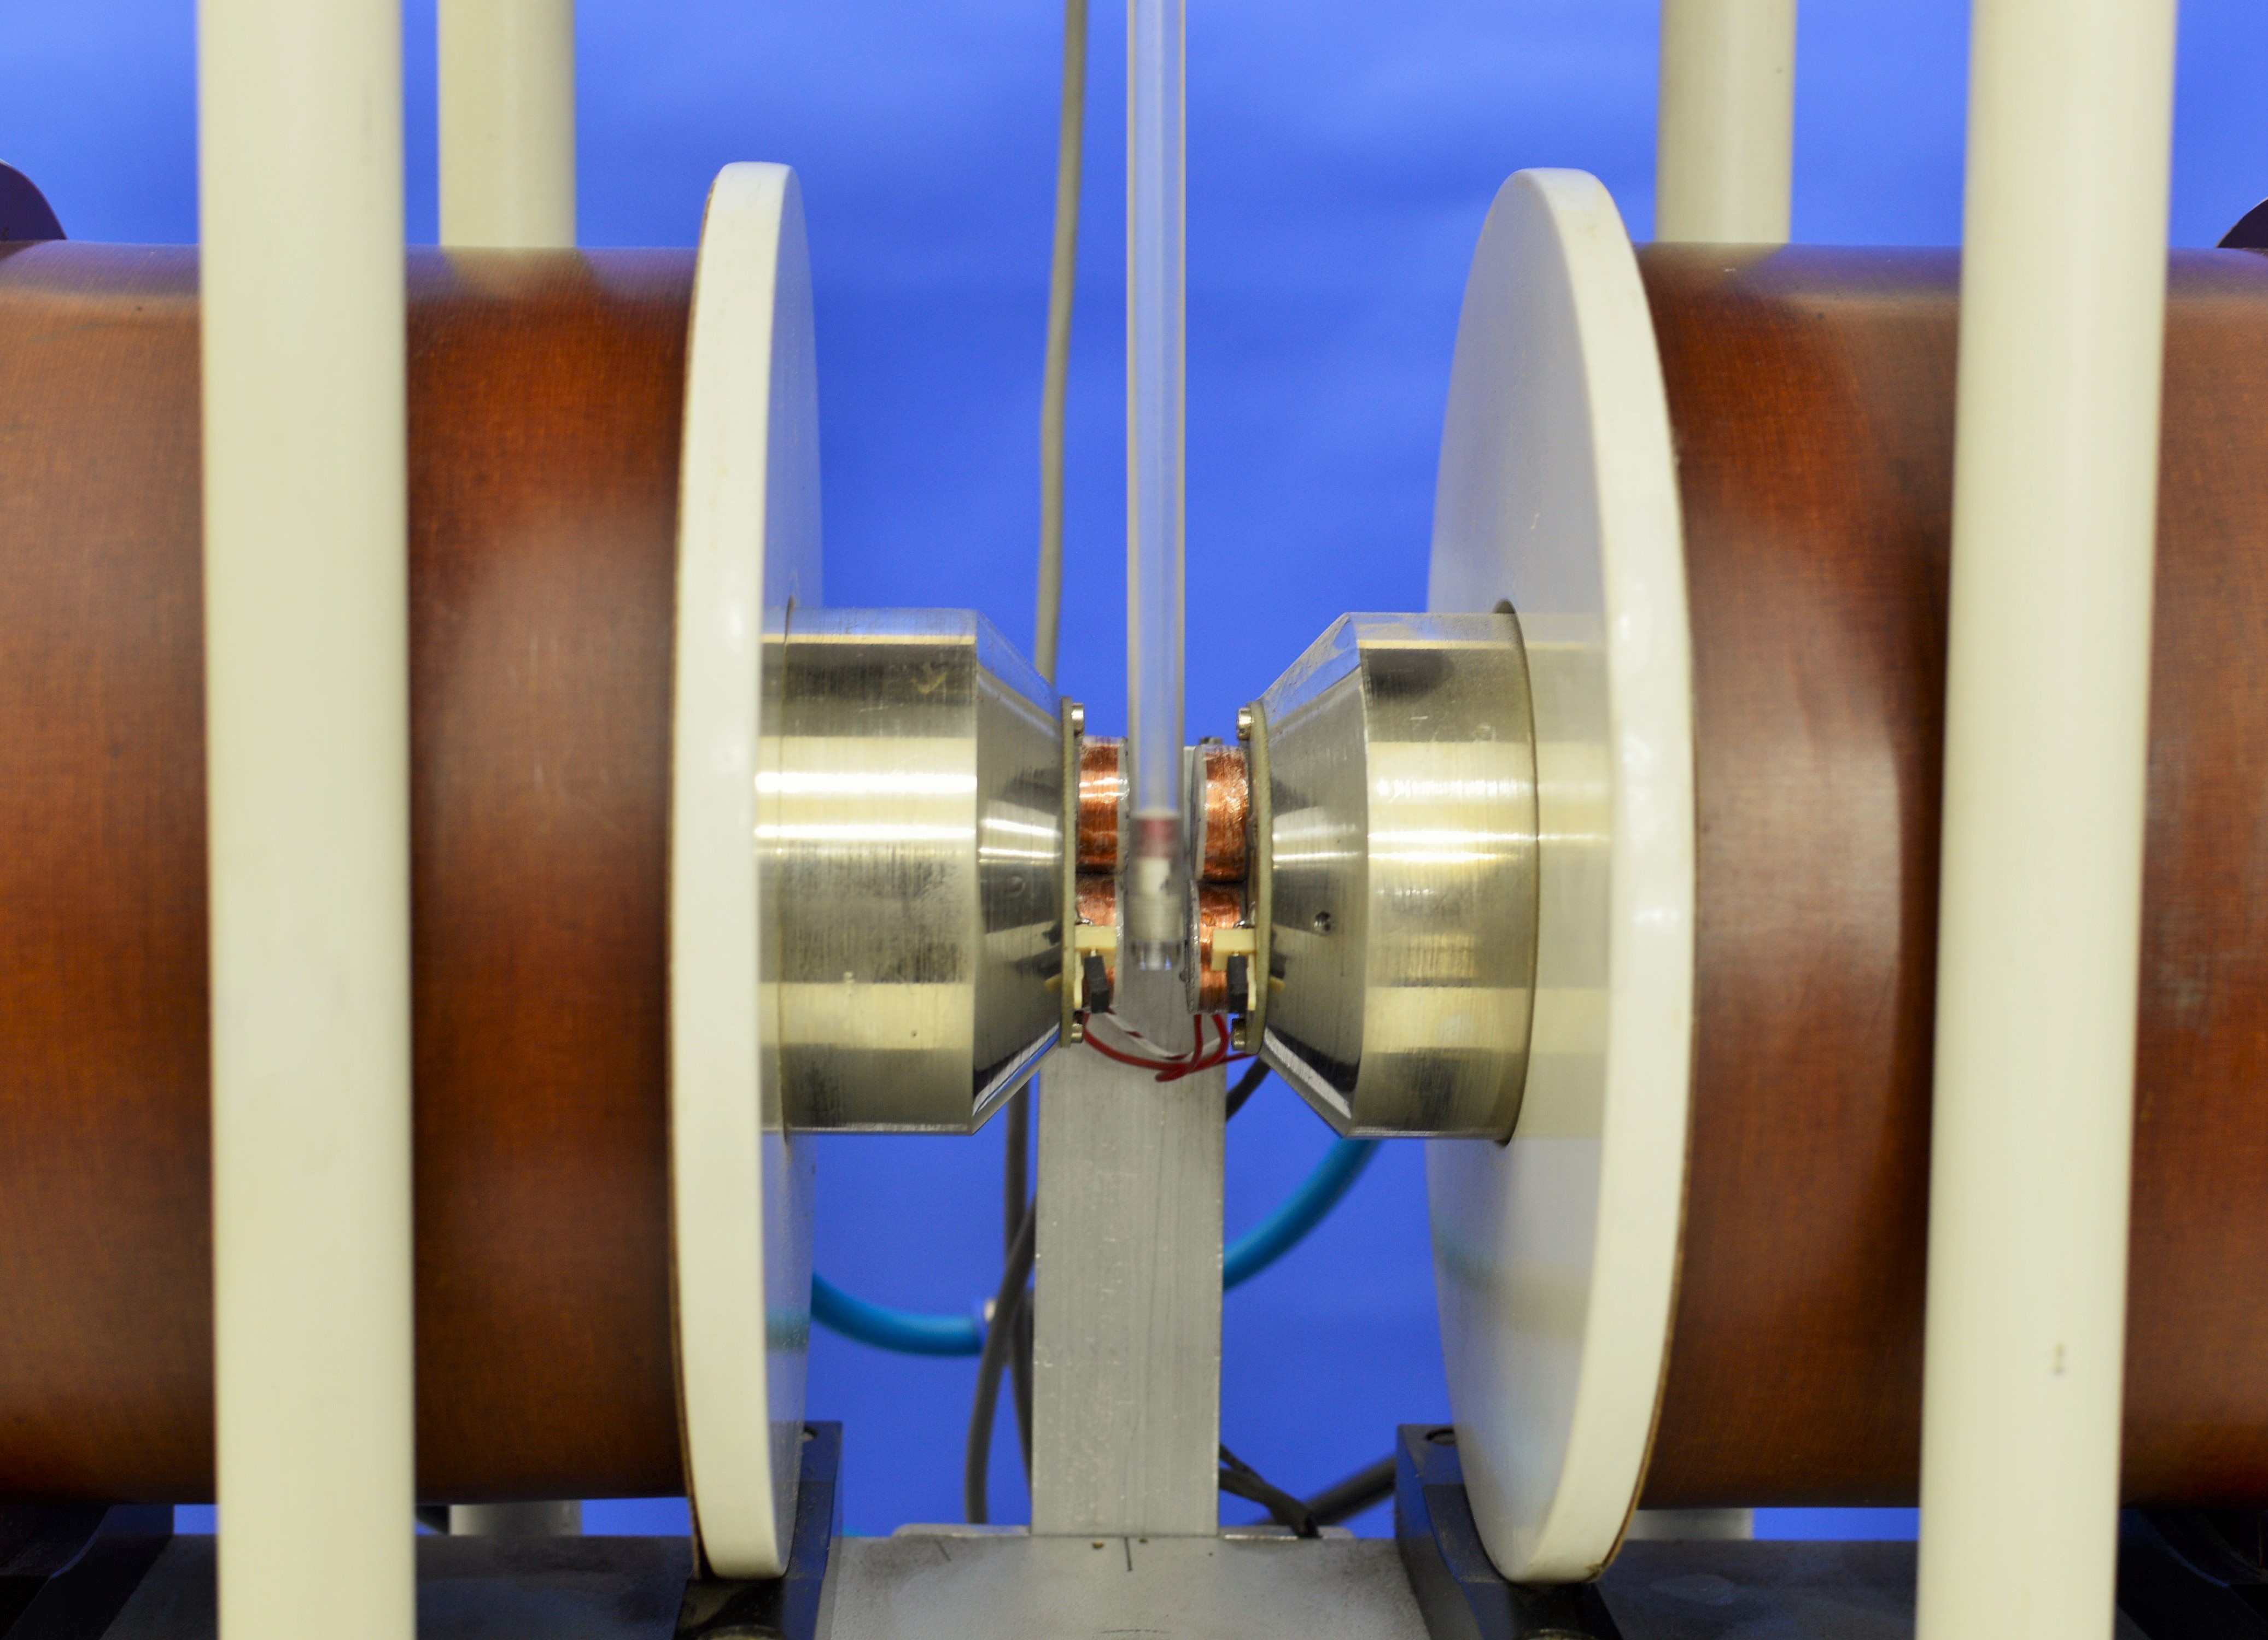 Vibrating Sample Magnetometer, VSM-1000